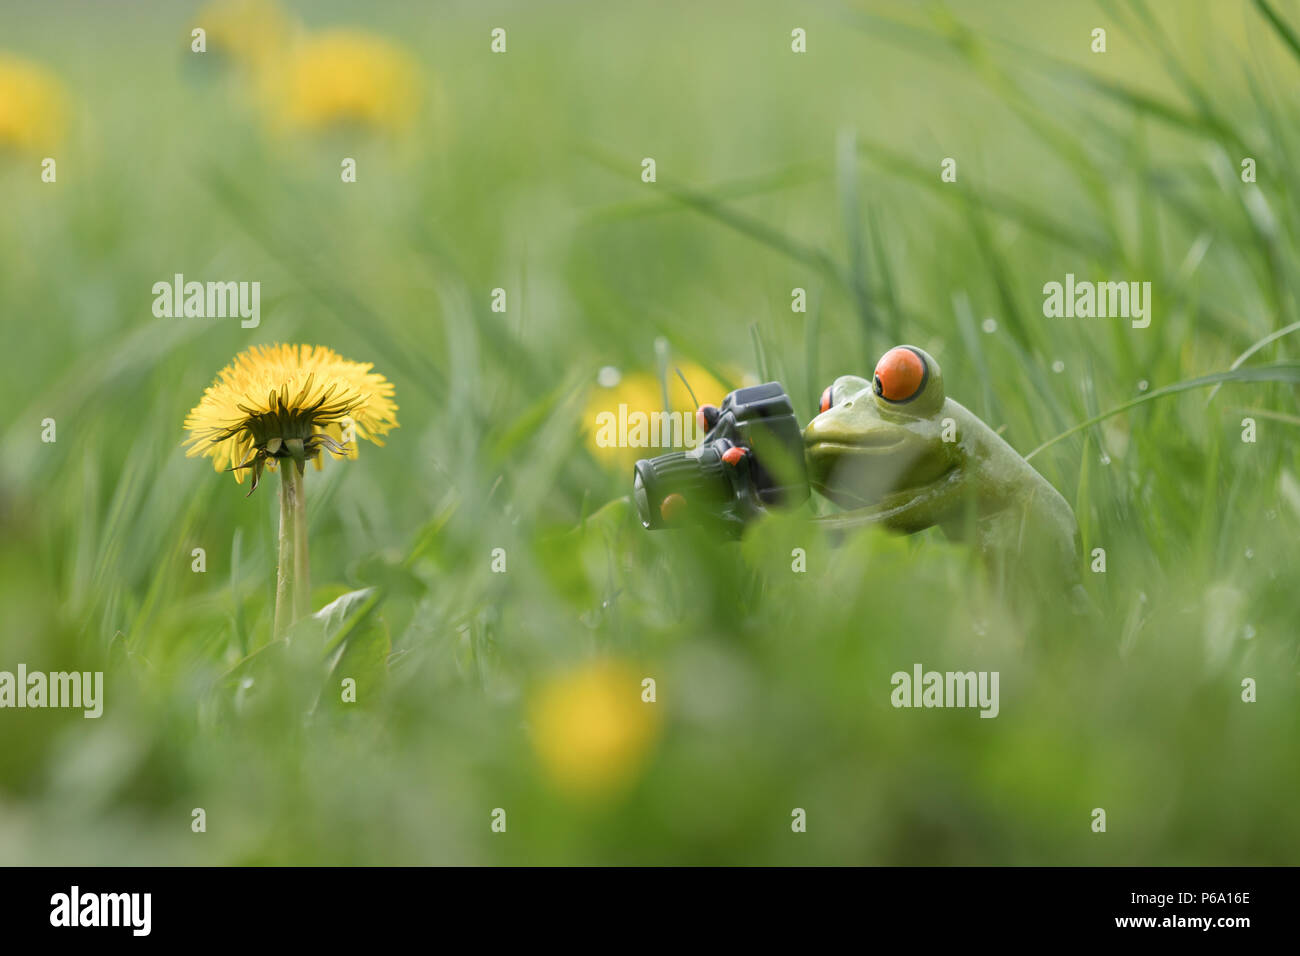 photographer frog dandelion Stock Photo